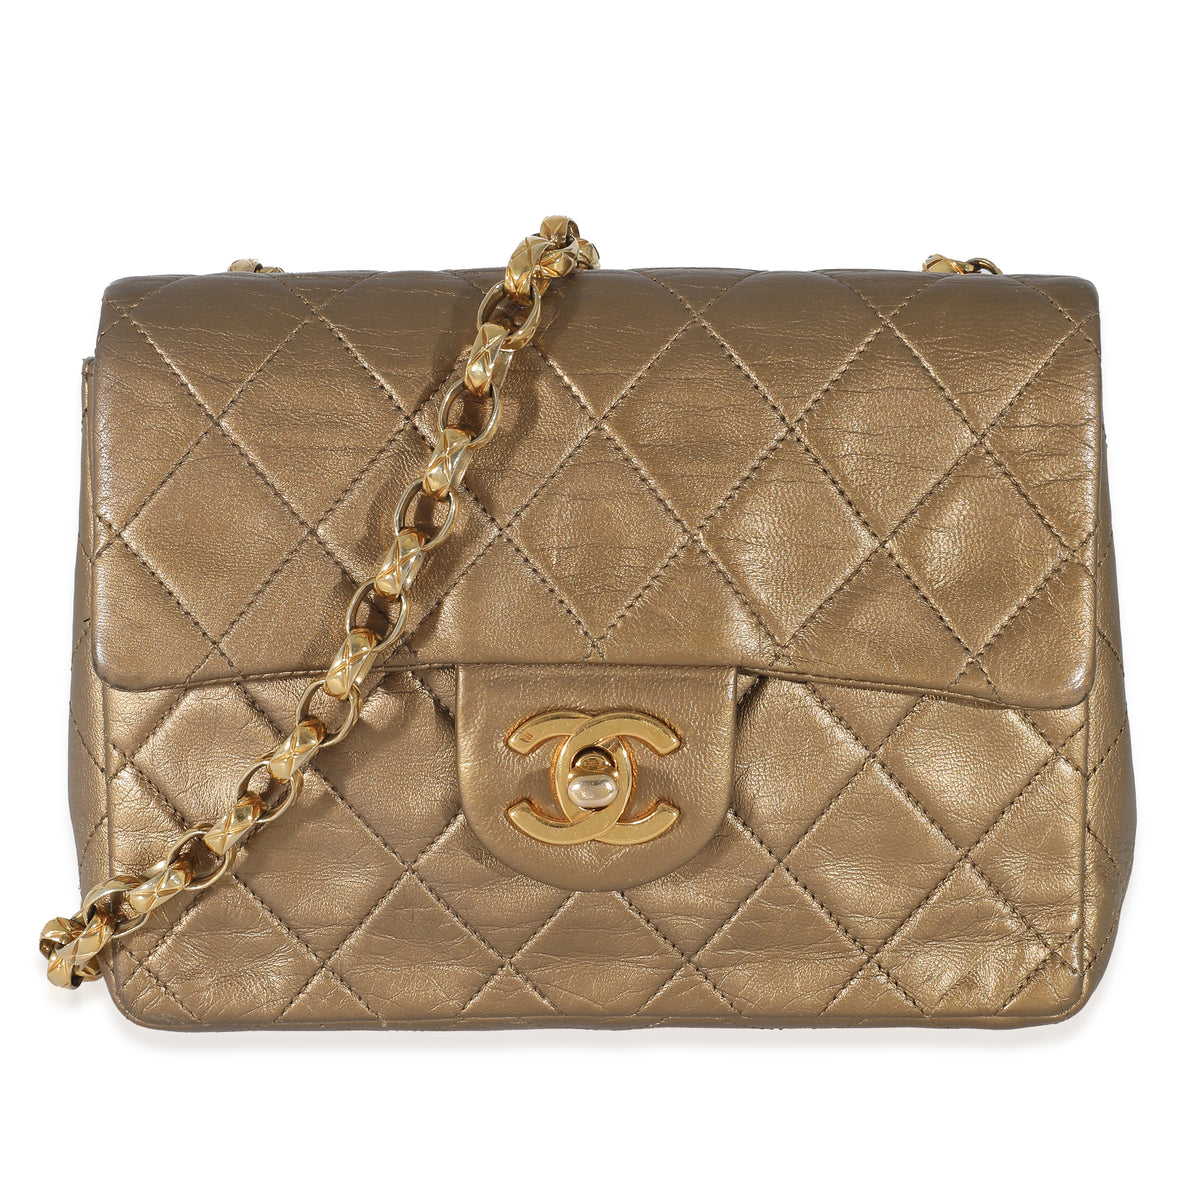 CHANEL Caviar Leather Vintage Handbag Gold Buckle Handbag Black